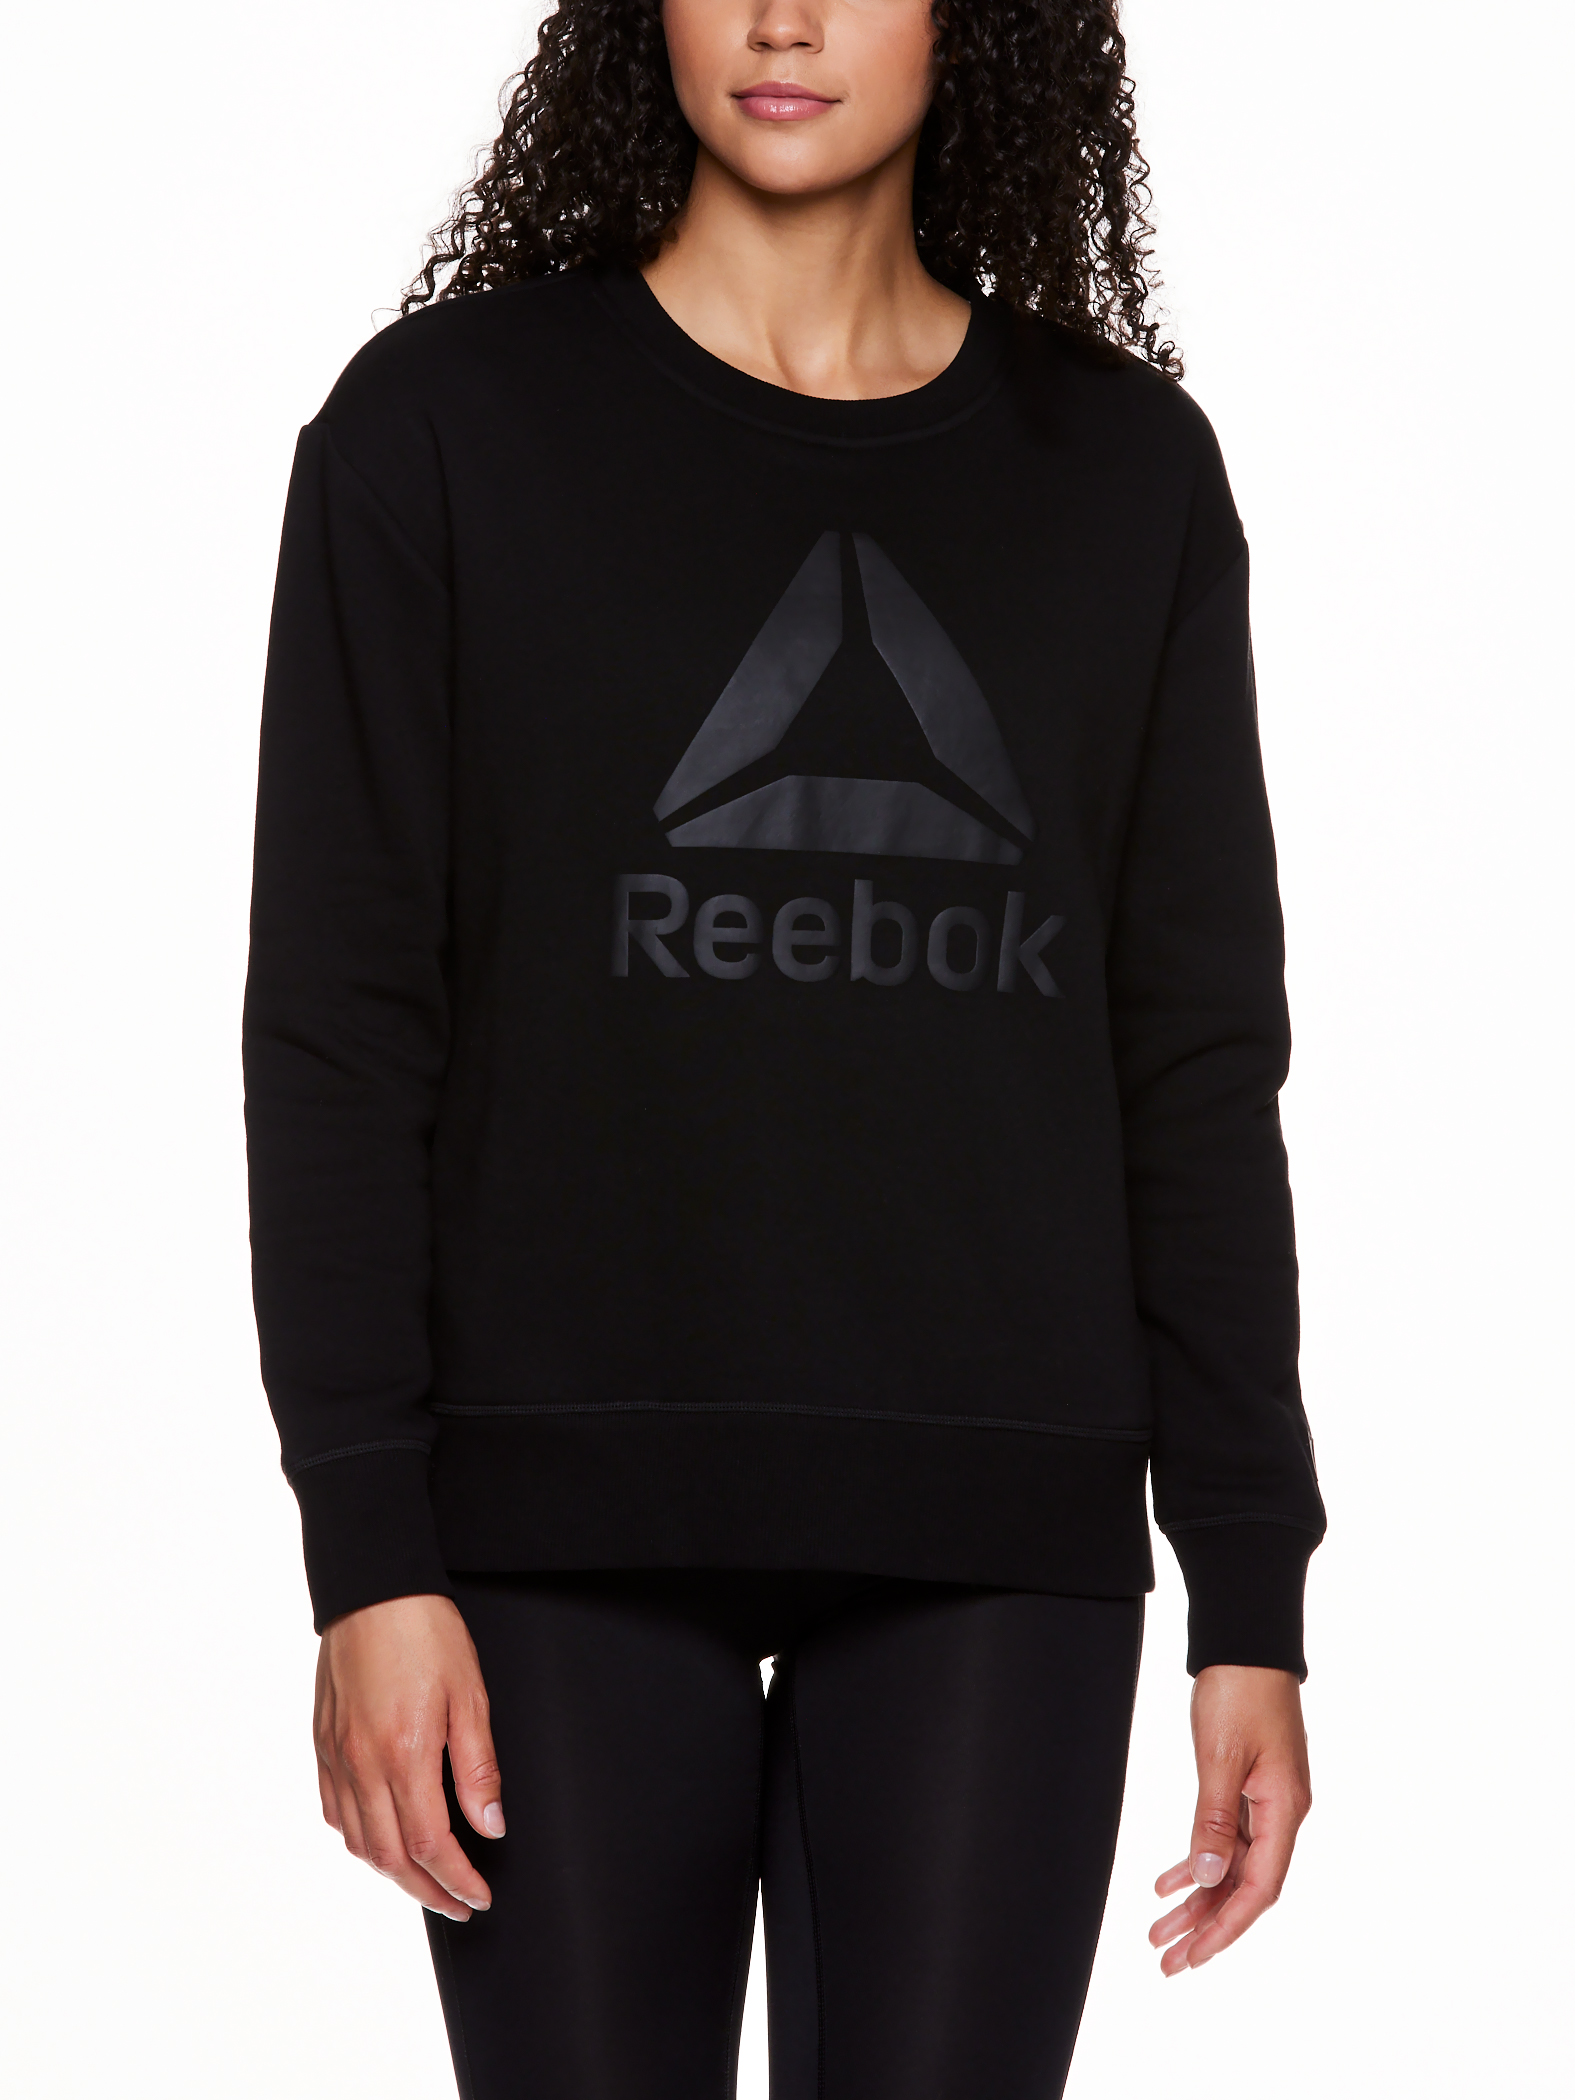 Reebok Women's Supersoft Gravity Crewneck Sweatshirt with Side Pockets - image 3 of 7